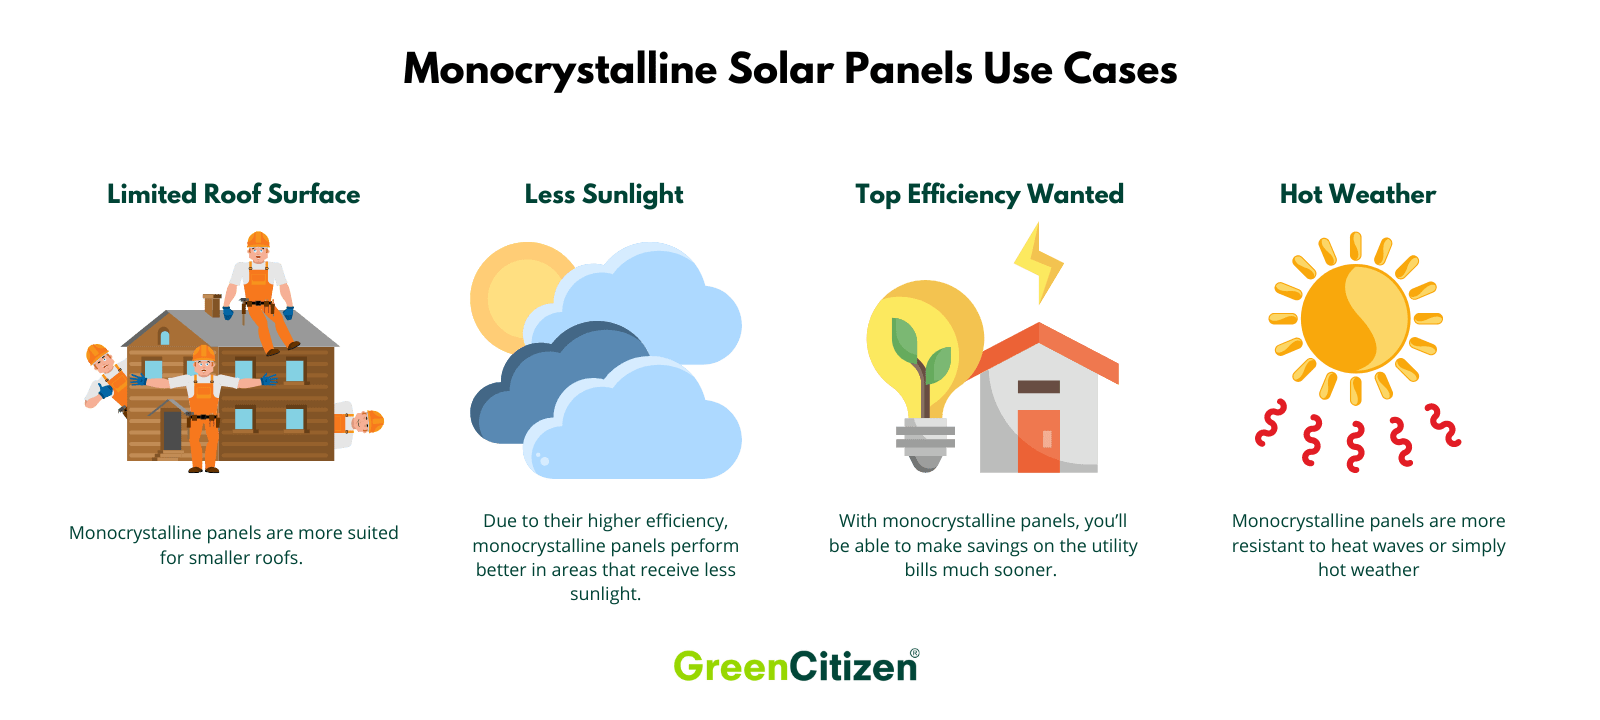 Monocrystalline Solar Panels Use Cases